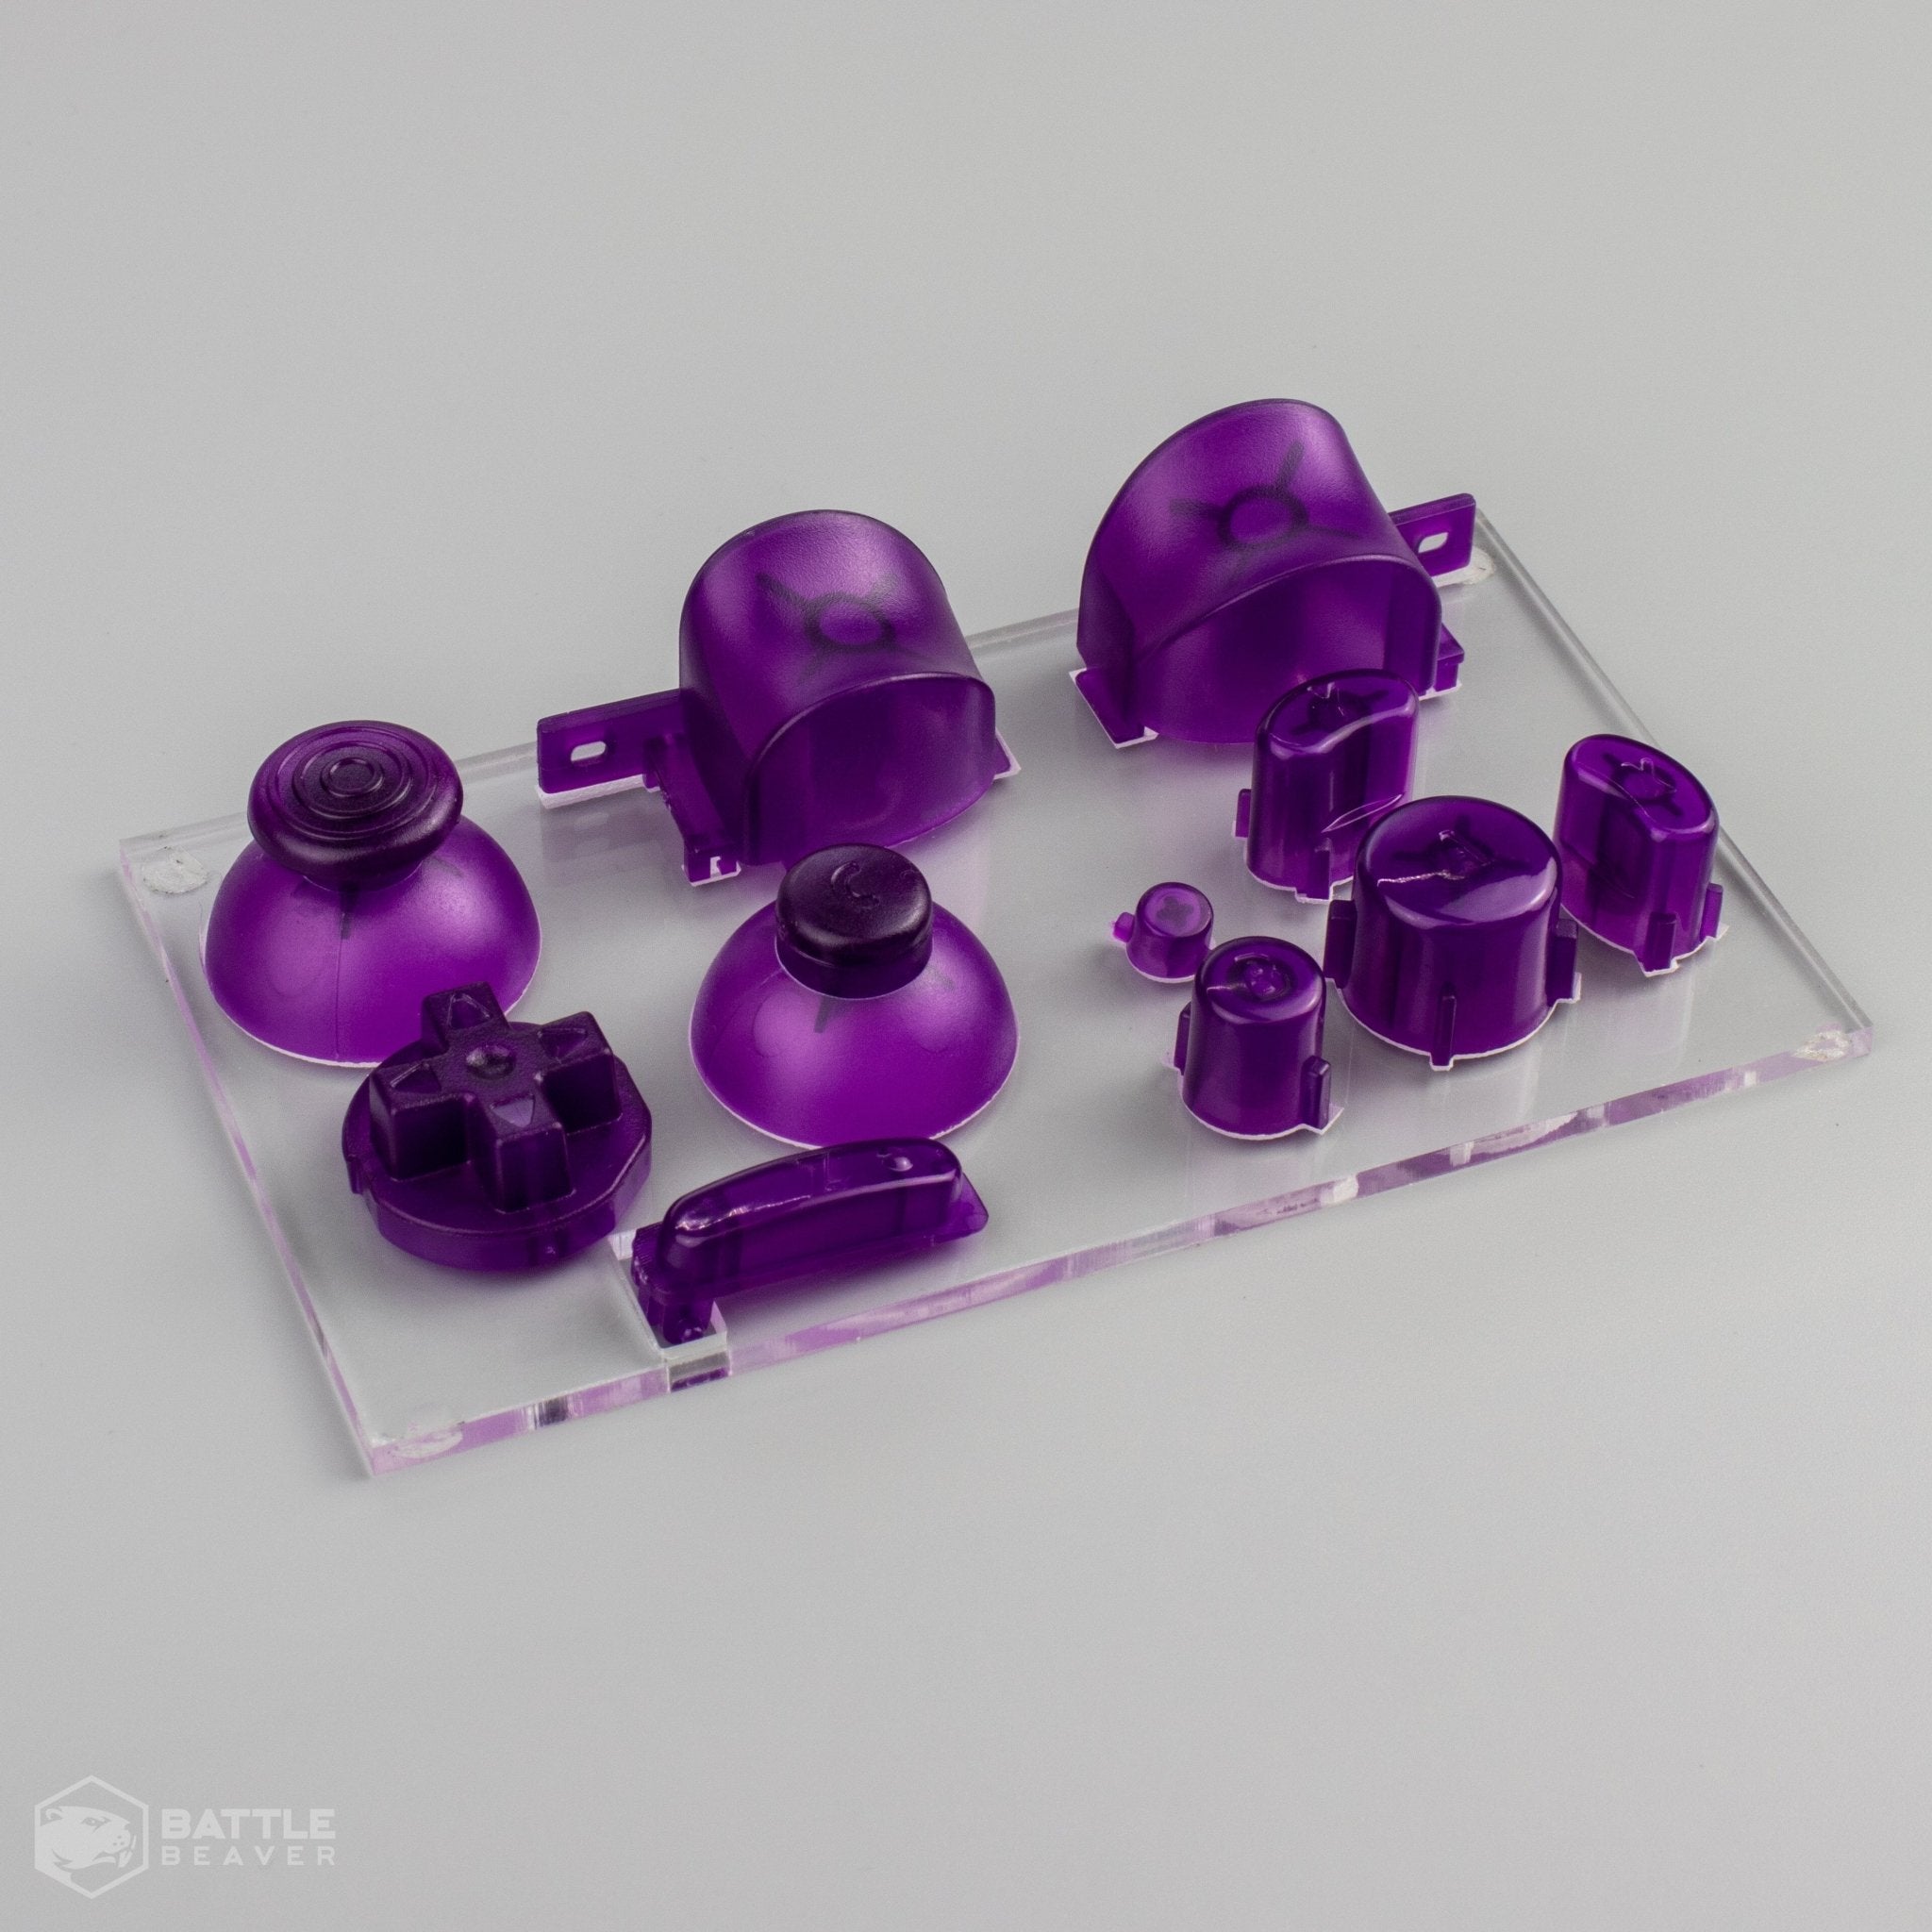 3rd Party Gamecube Parts Kit - Battle Beaver Customs - Crystal Purple